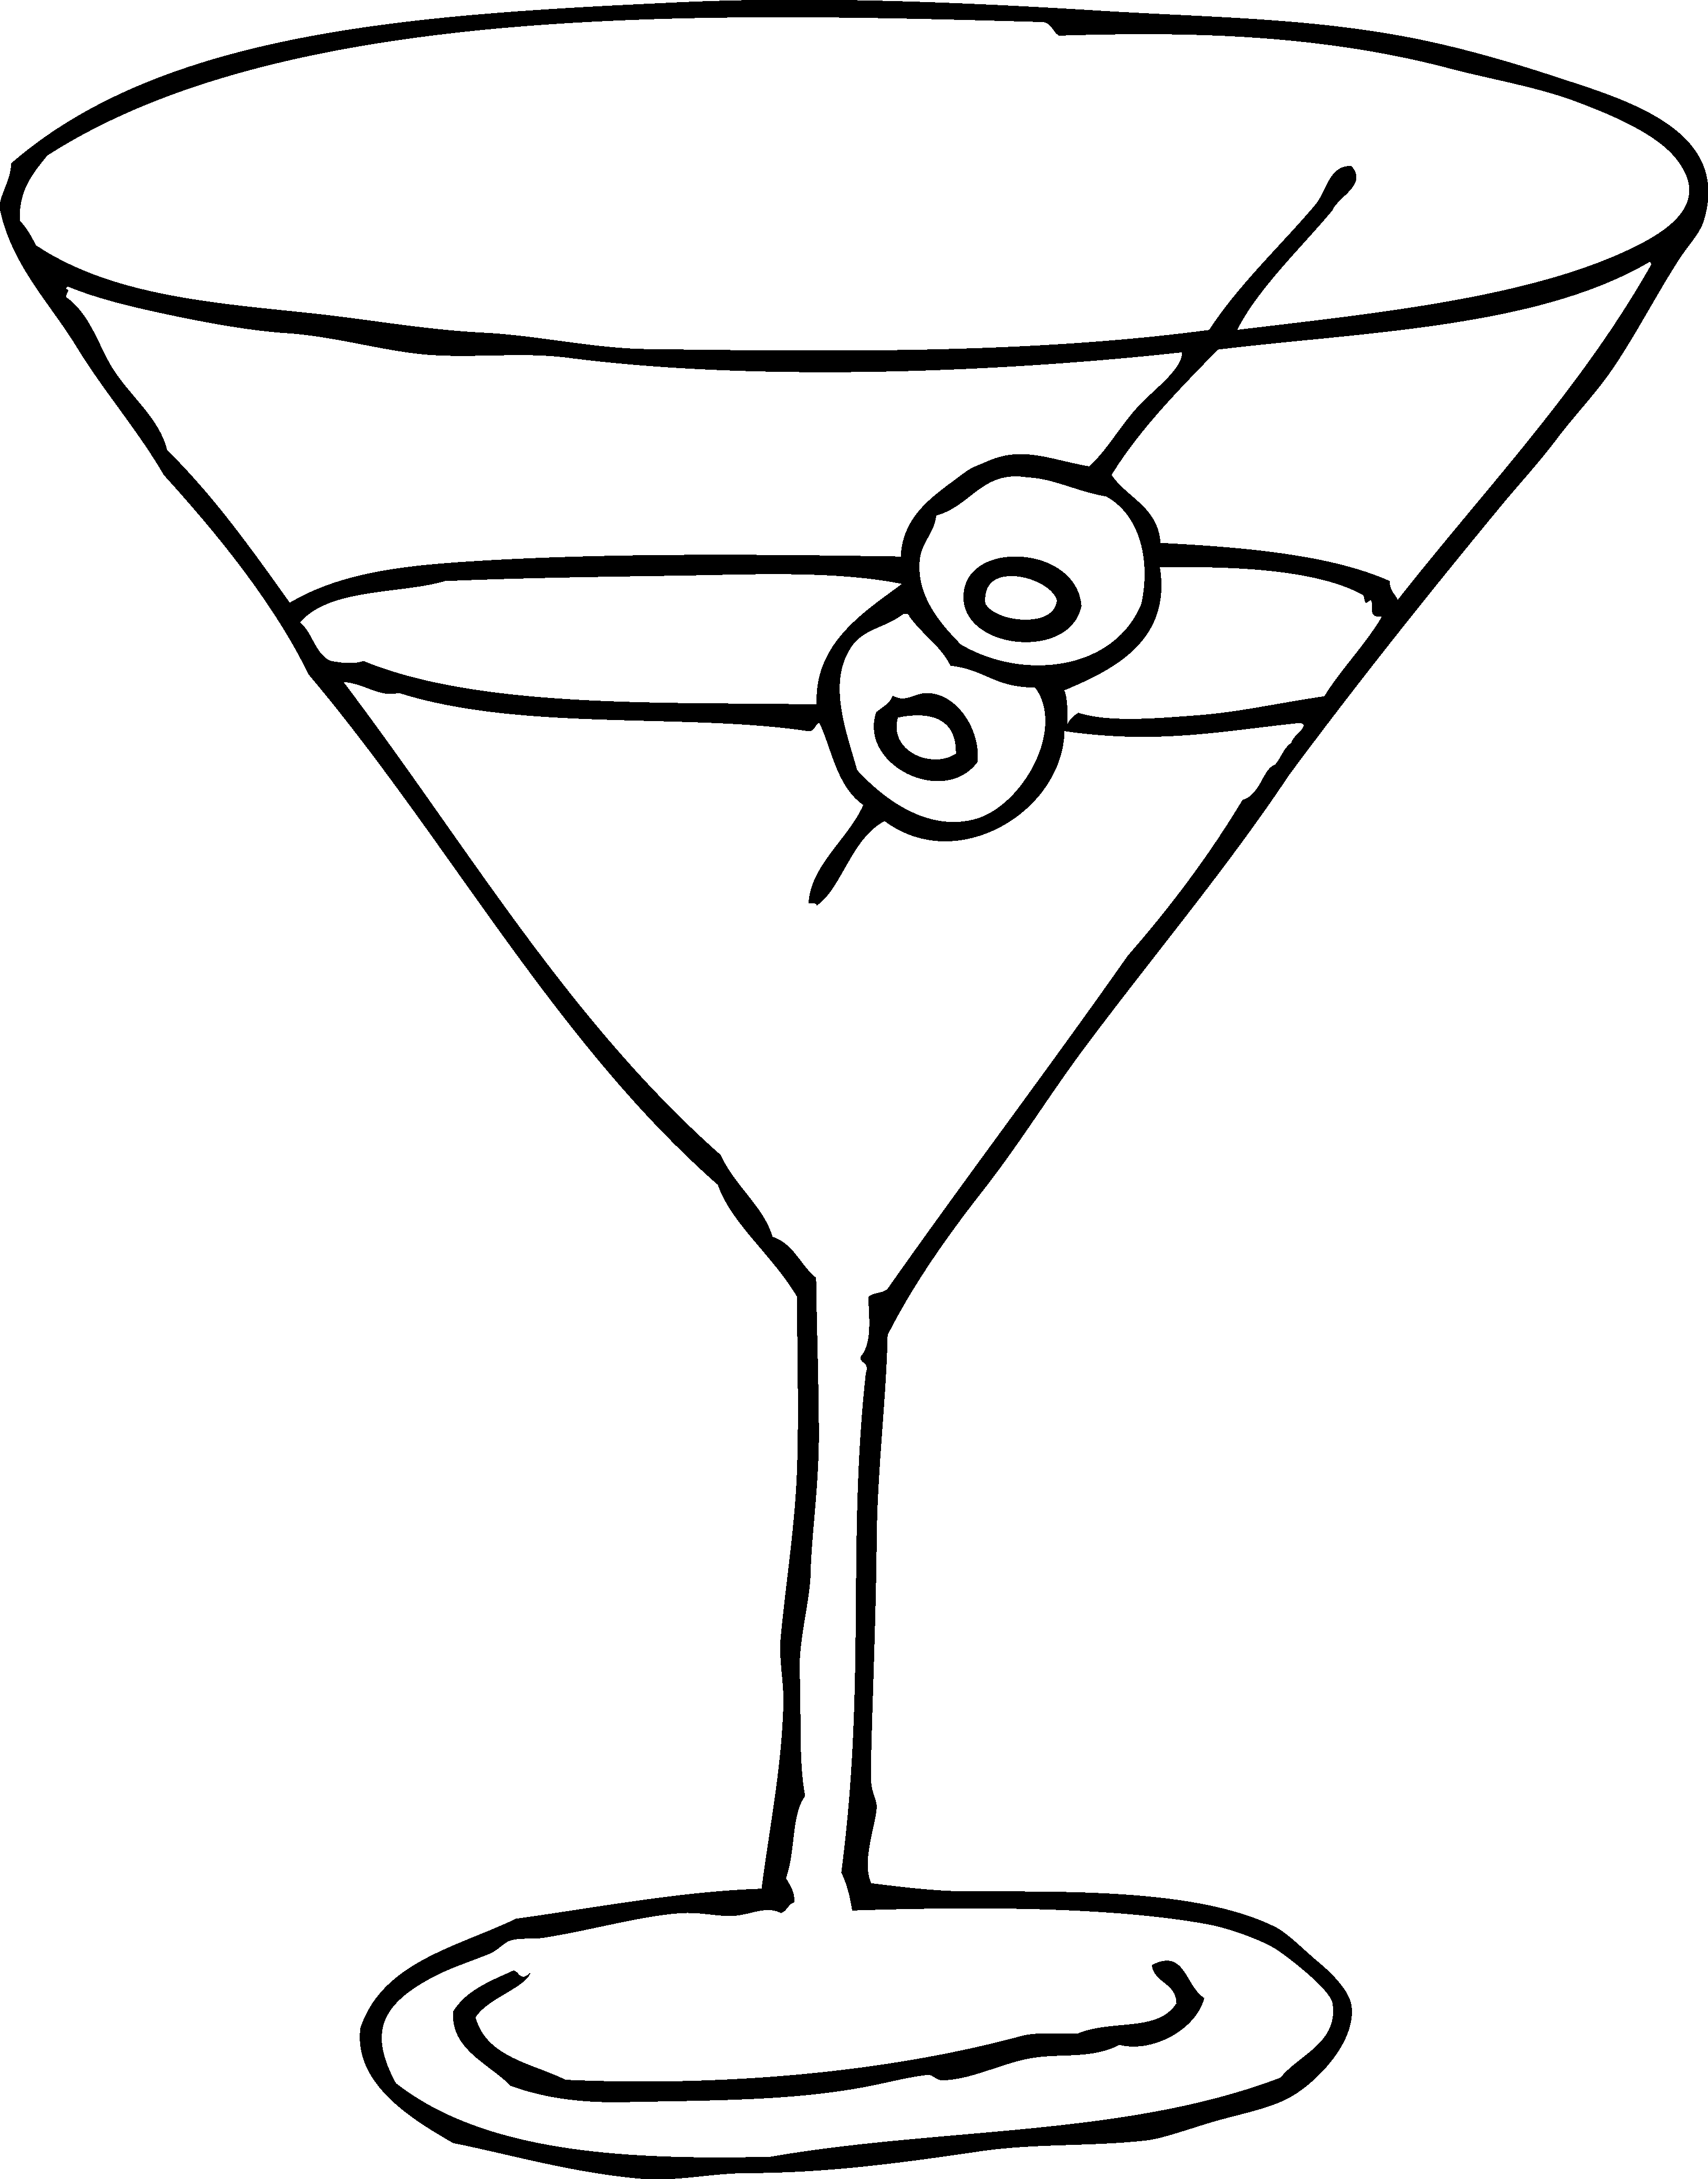 Martini glass clipart black and white